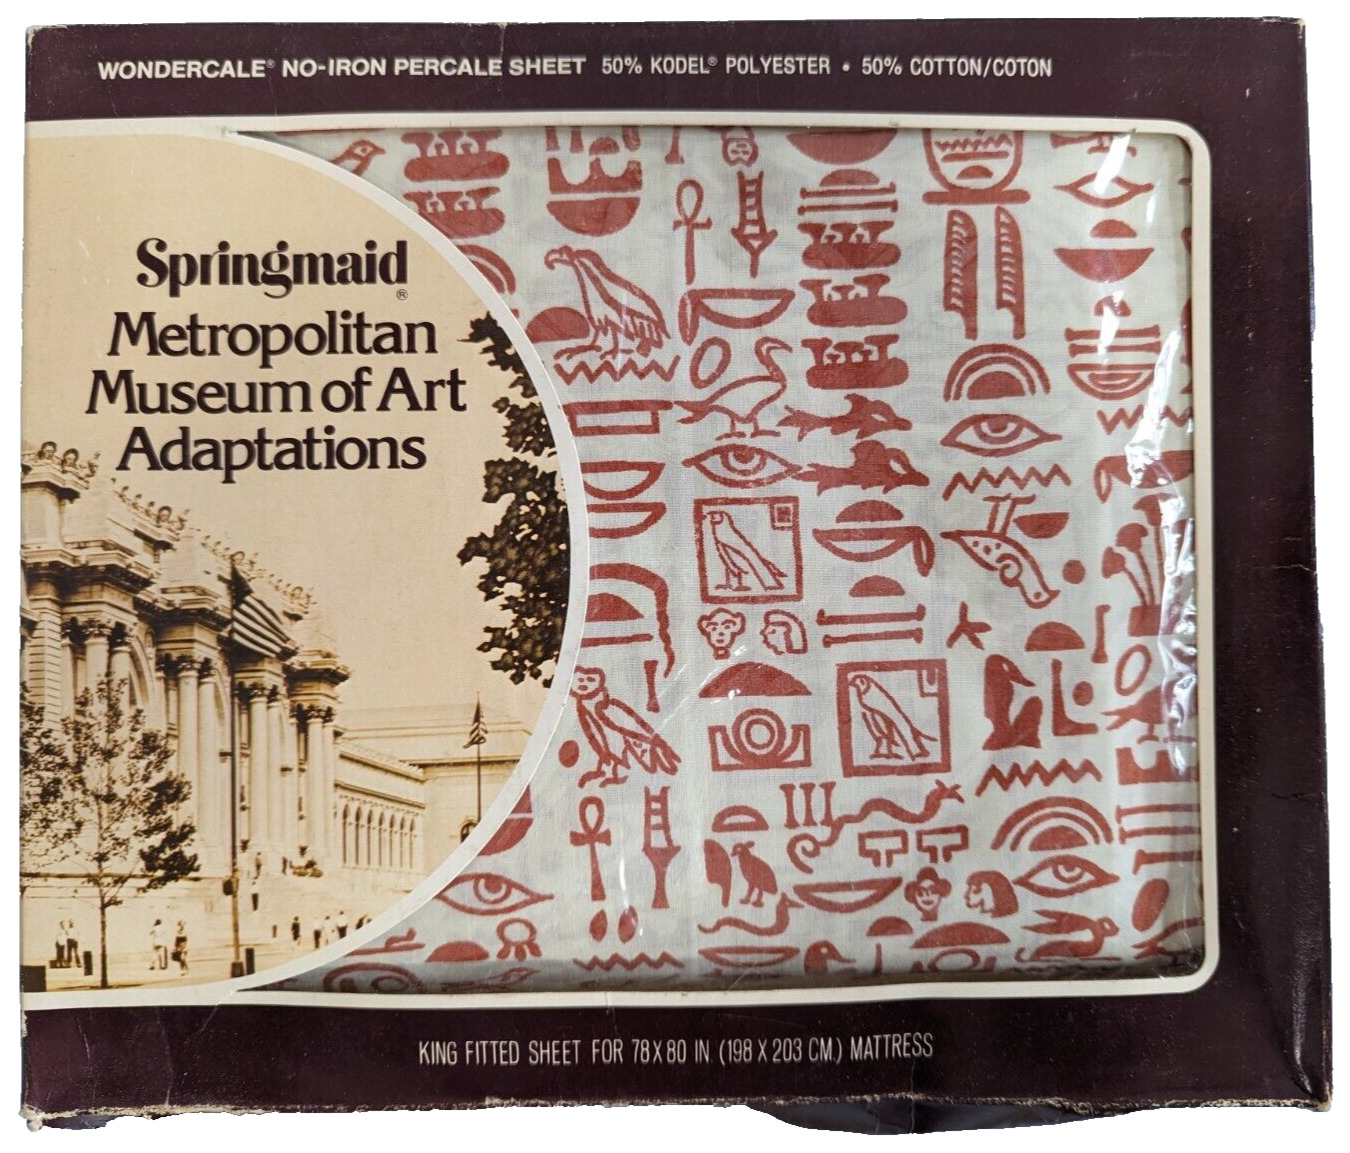 Vintage 1970s Springmaid Met Museum Art Egyptian Design King Fitted Sheet NIB